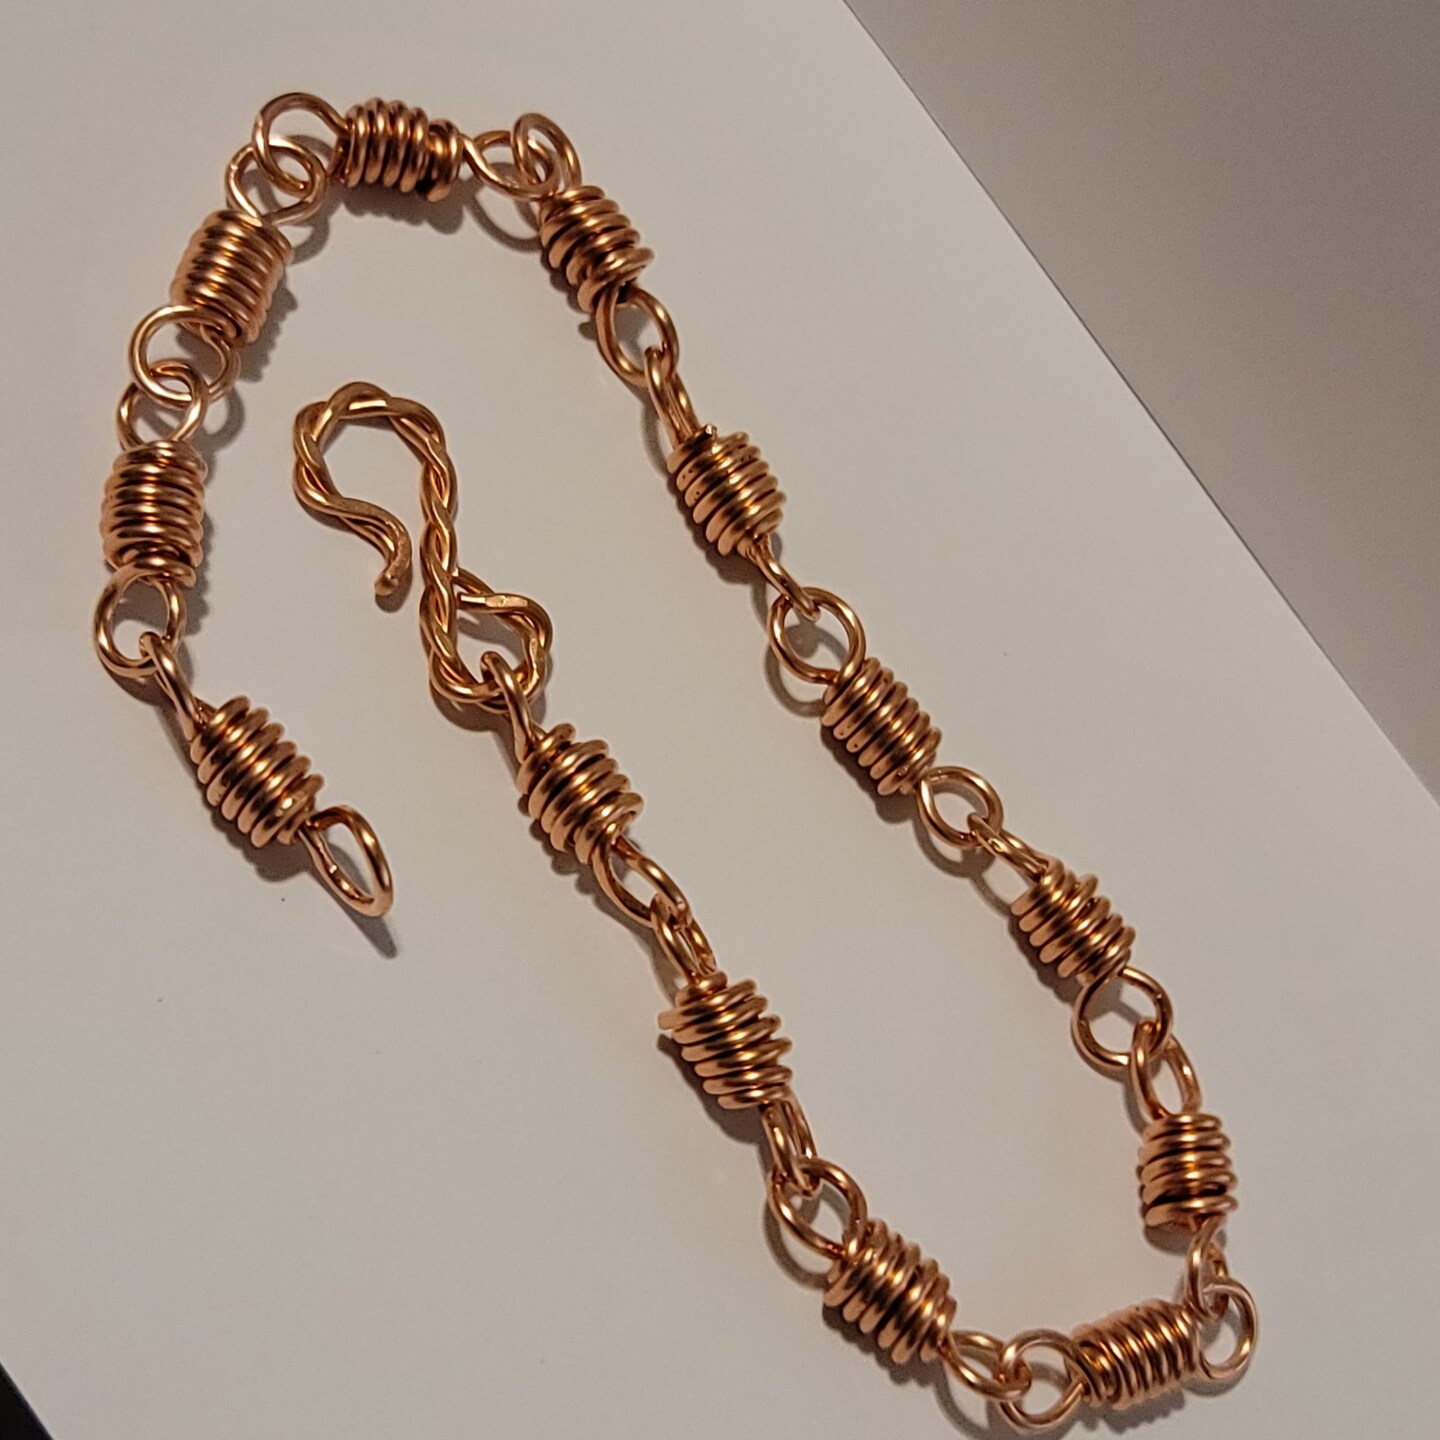 Copper Chain Link Bracelet with Herringbone Wire Weave - Green | Chain link  bracelet, Copper chain, Link bracelets